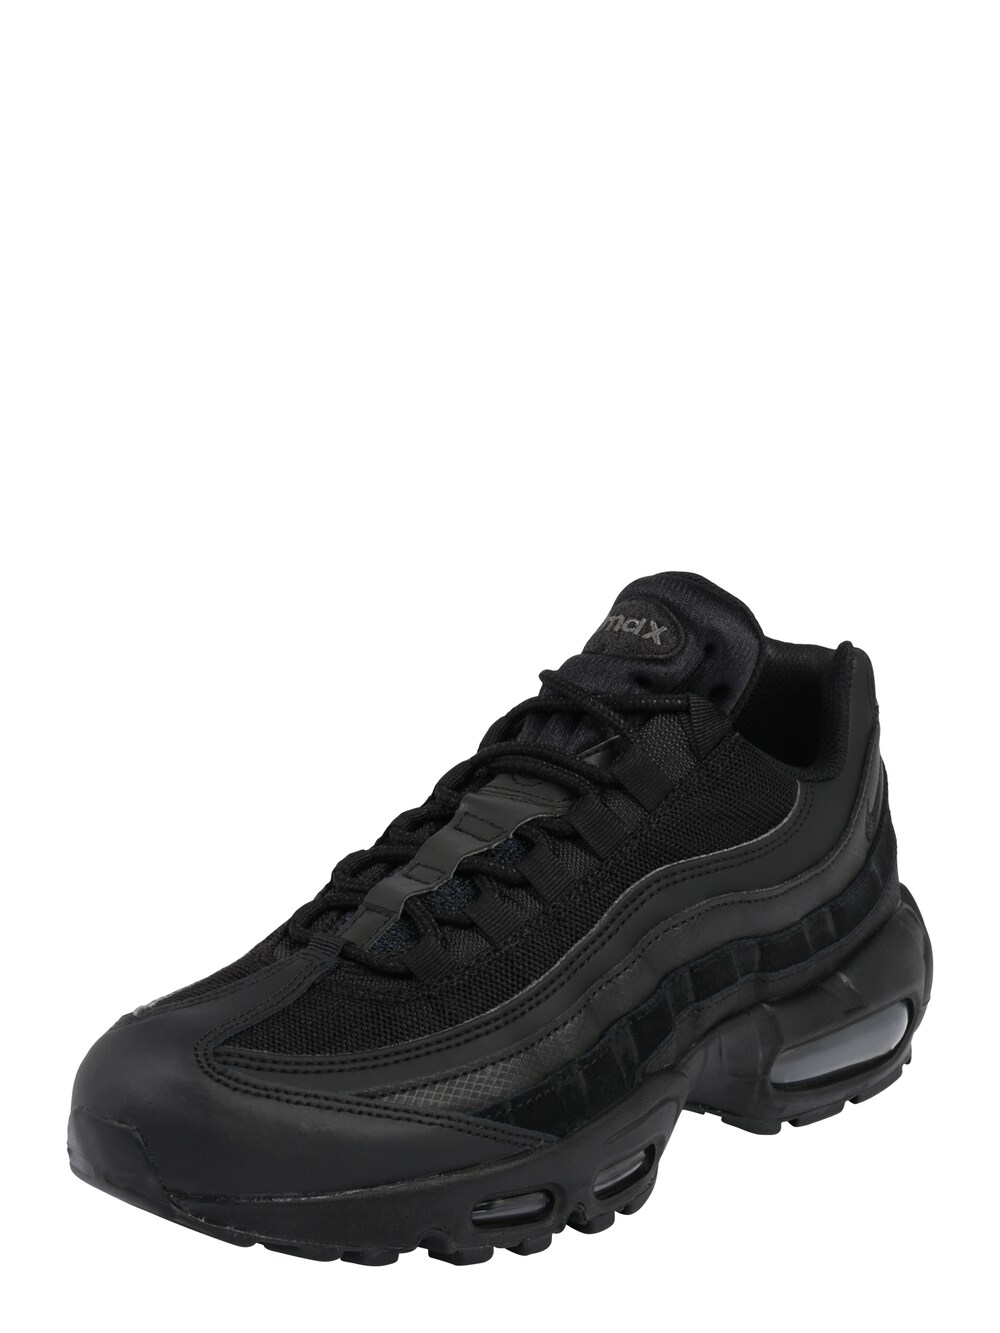 Кроссовки Nike Sportswear Air Max 95 Essential, черный кроссовки nike sportswear air max 95 essential black dark grey